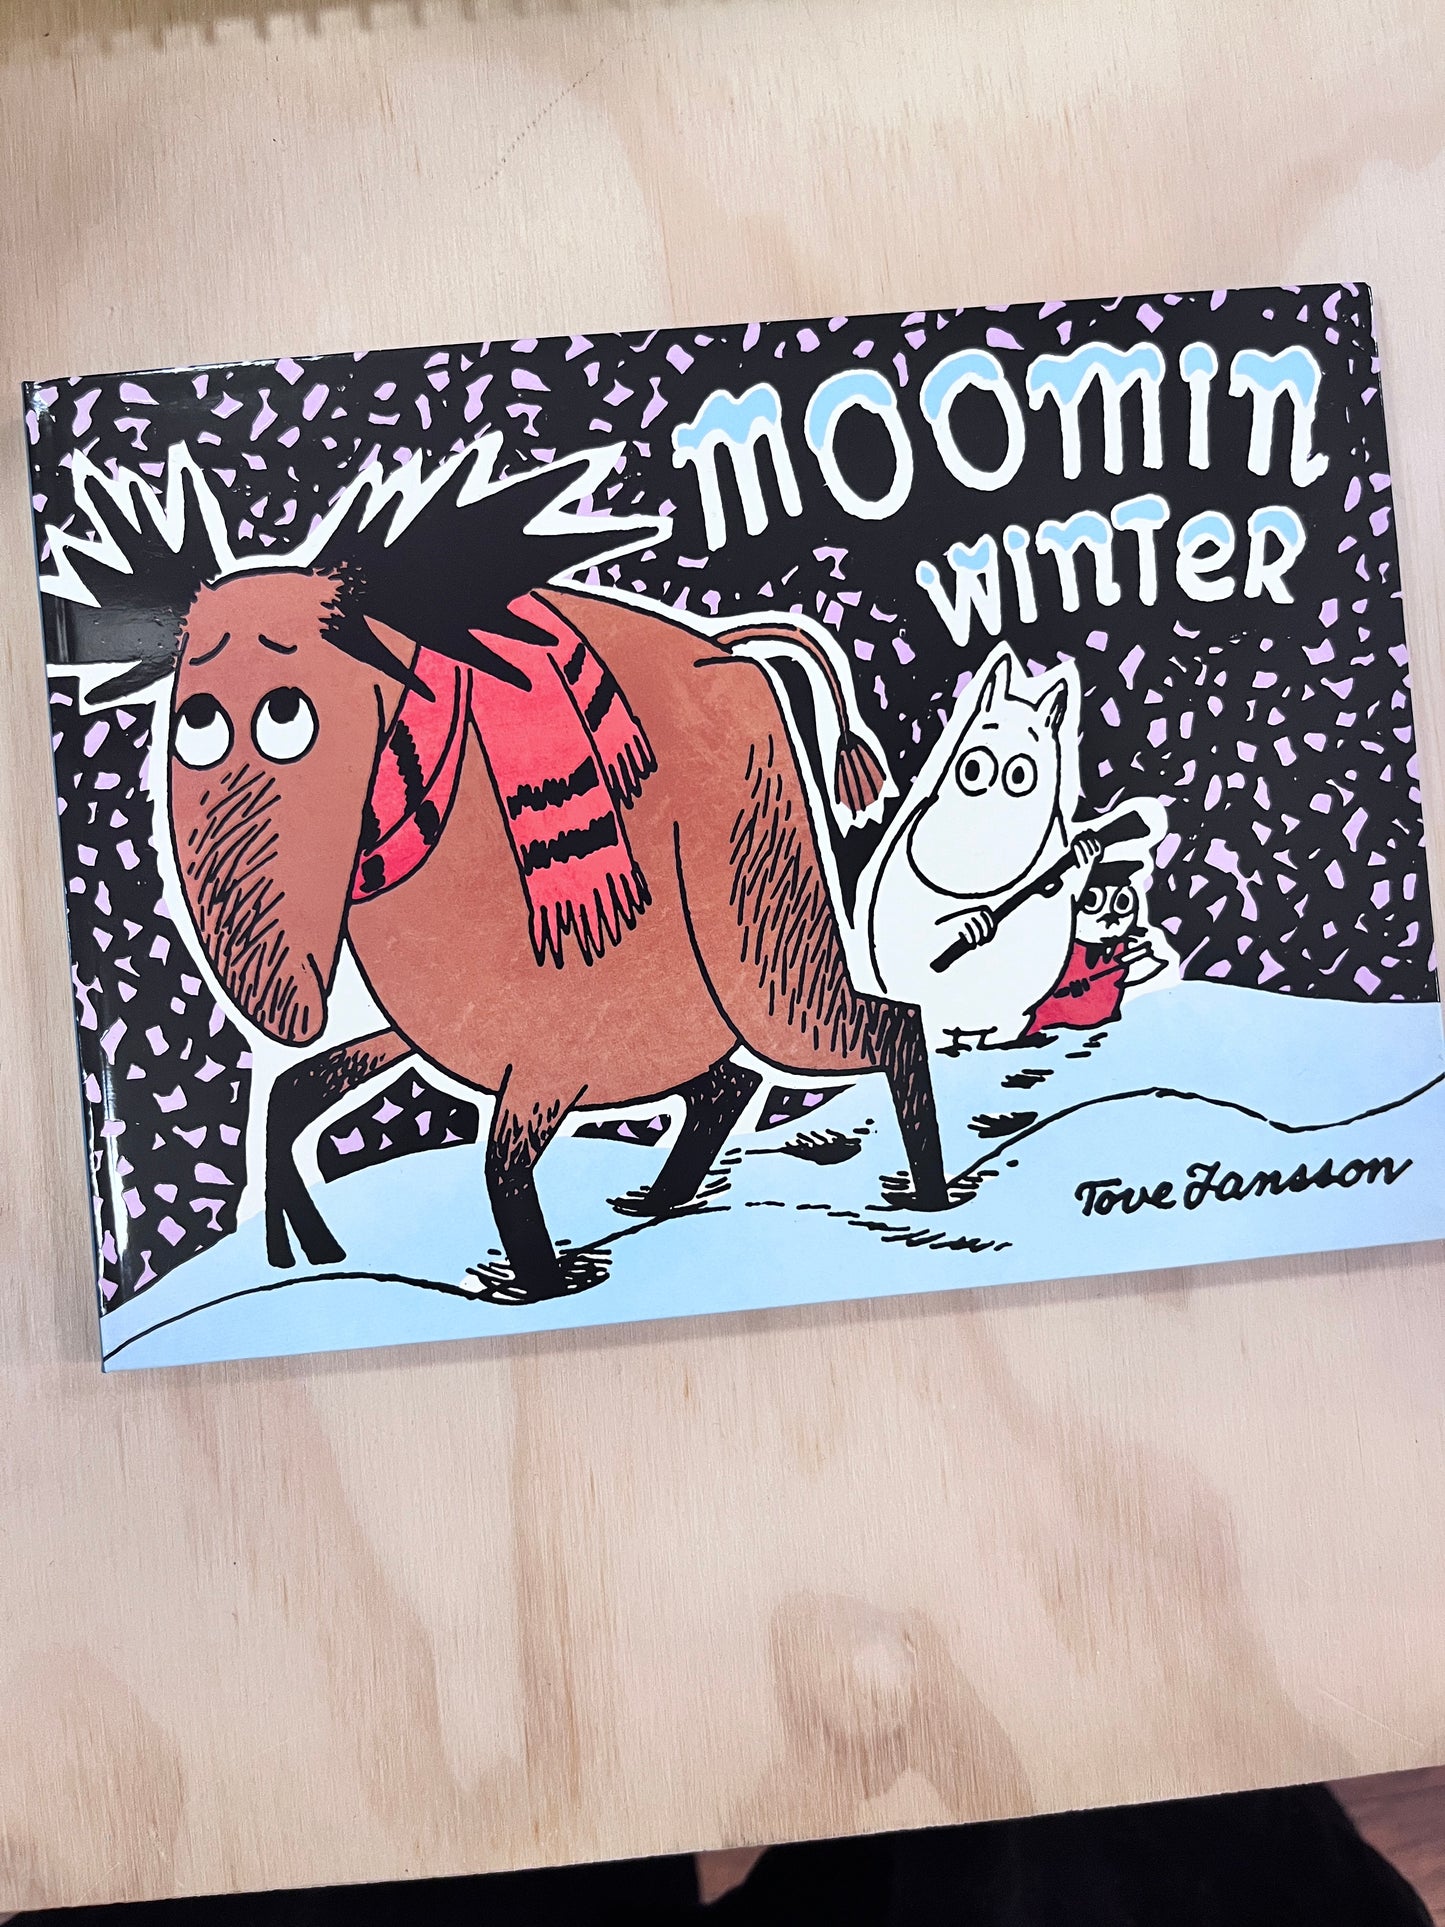 Moomin Winter